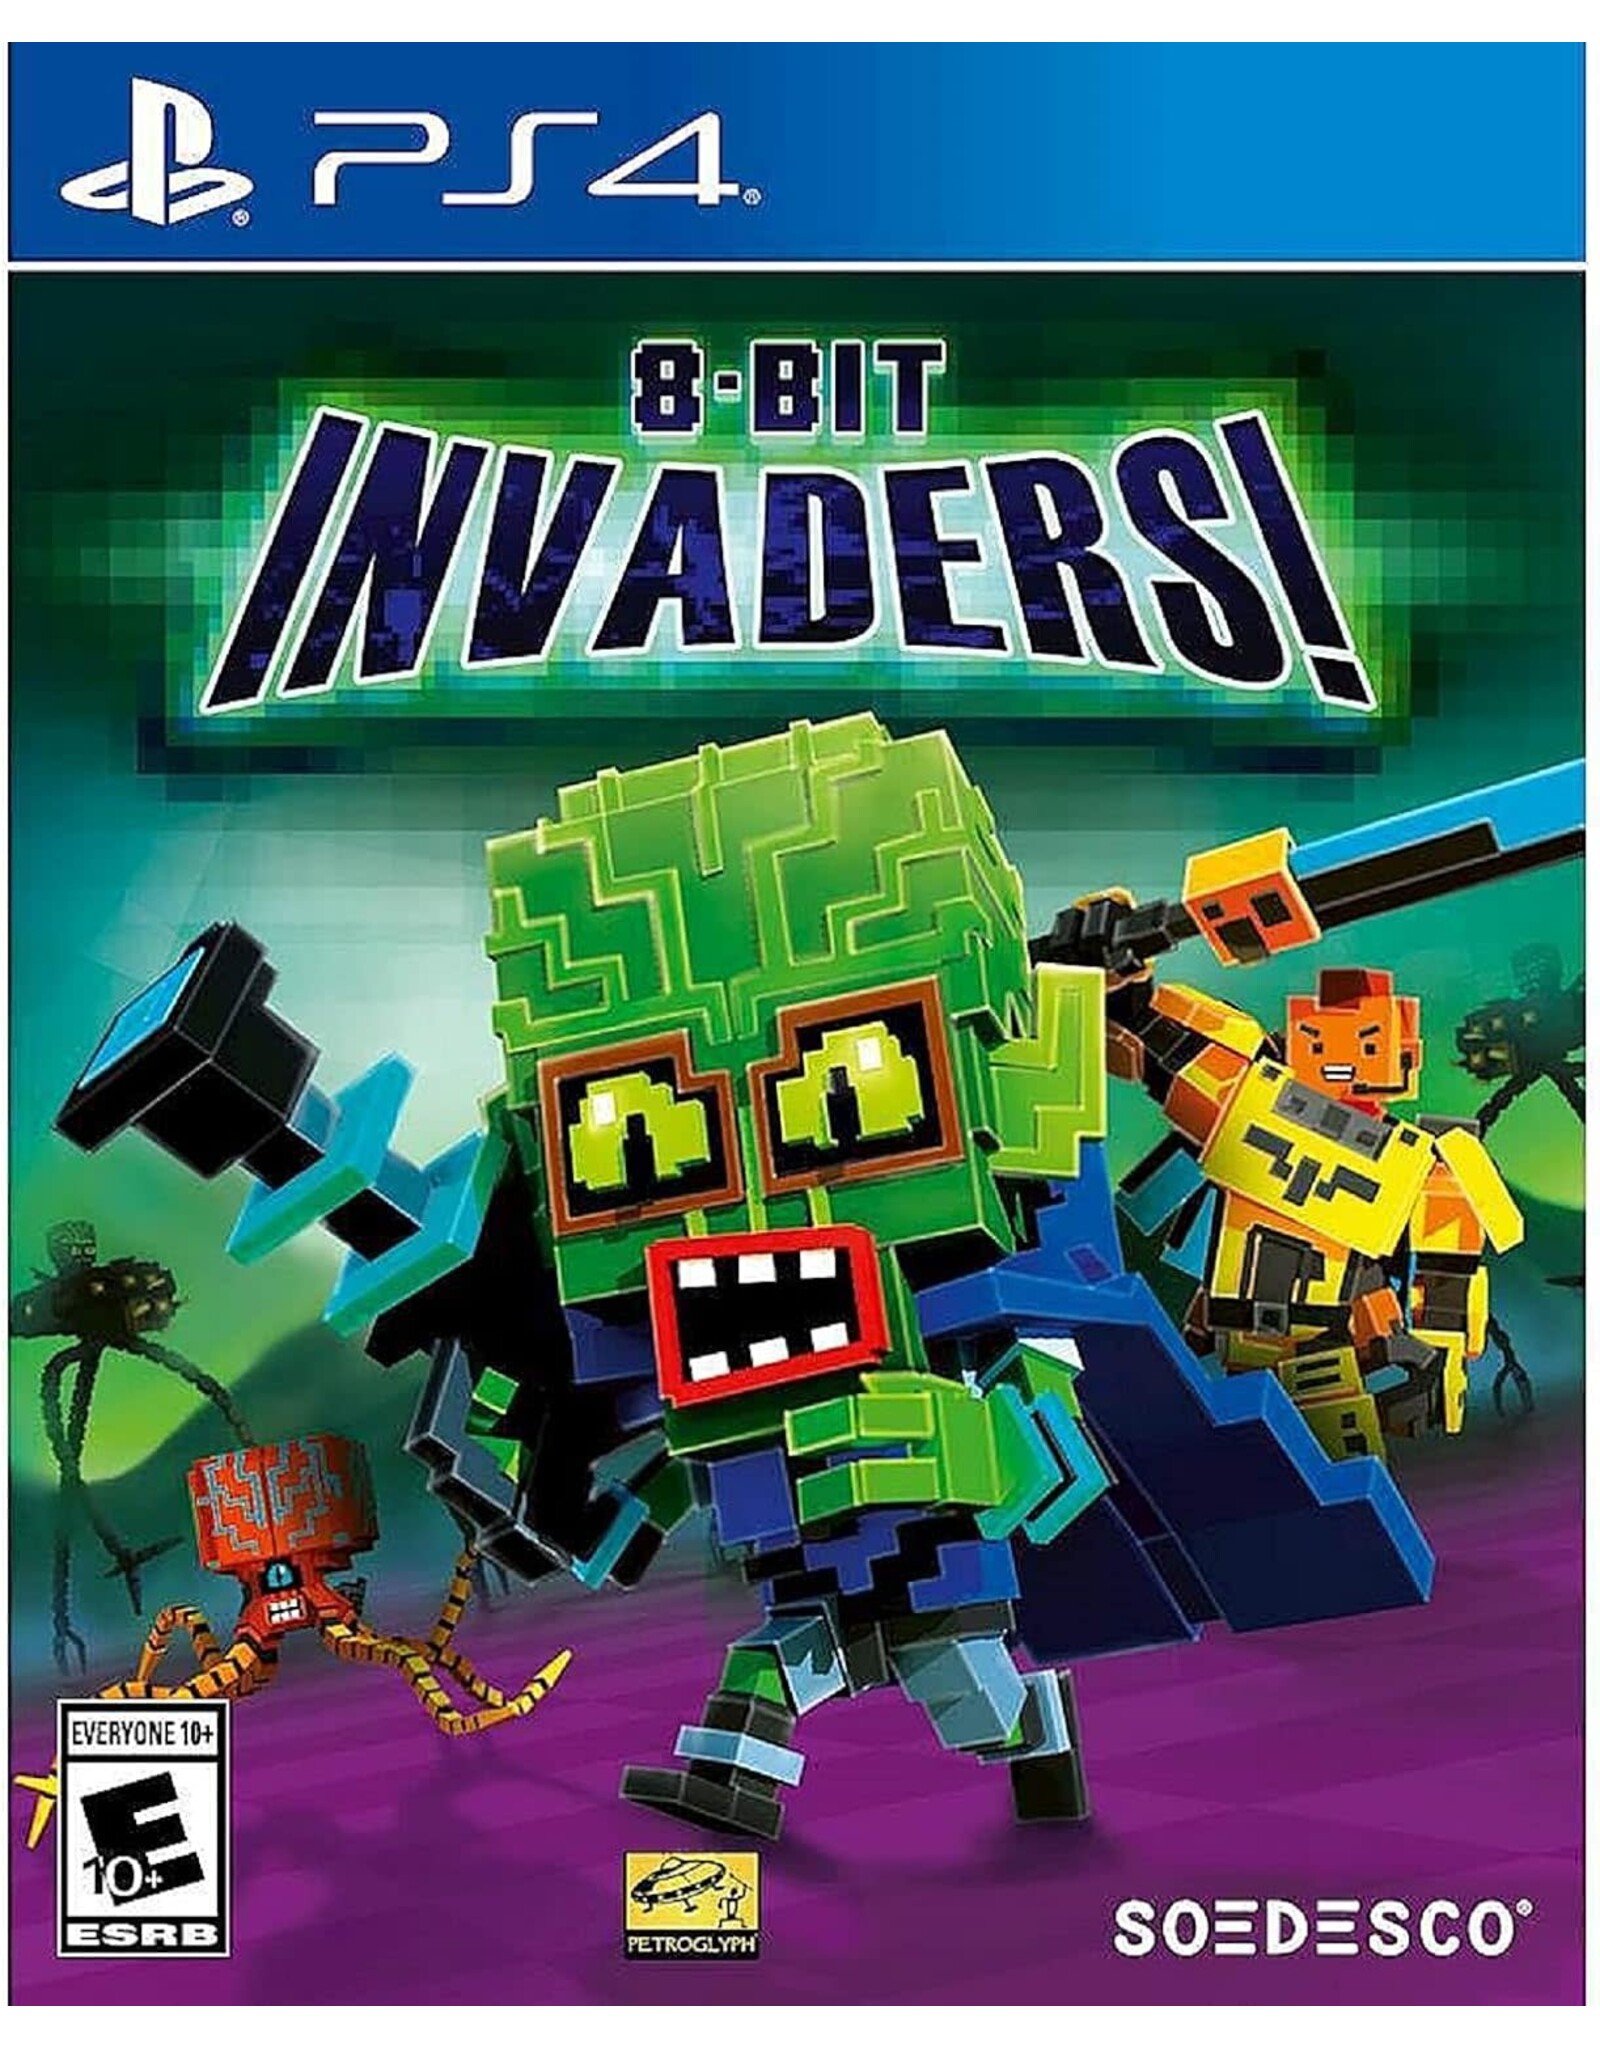 Playstation 4 8 Bit Invaders (Used)